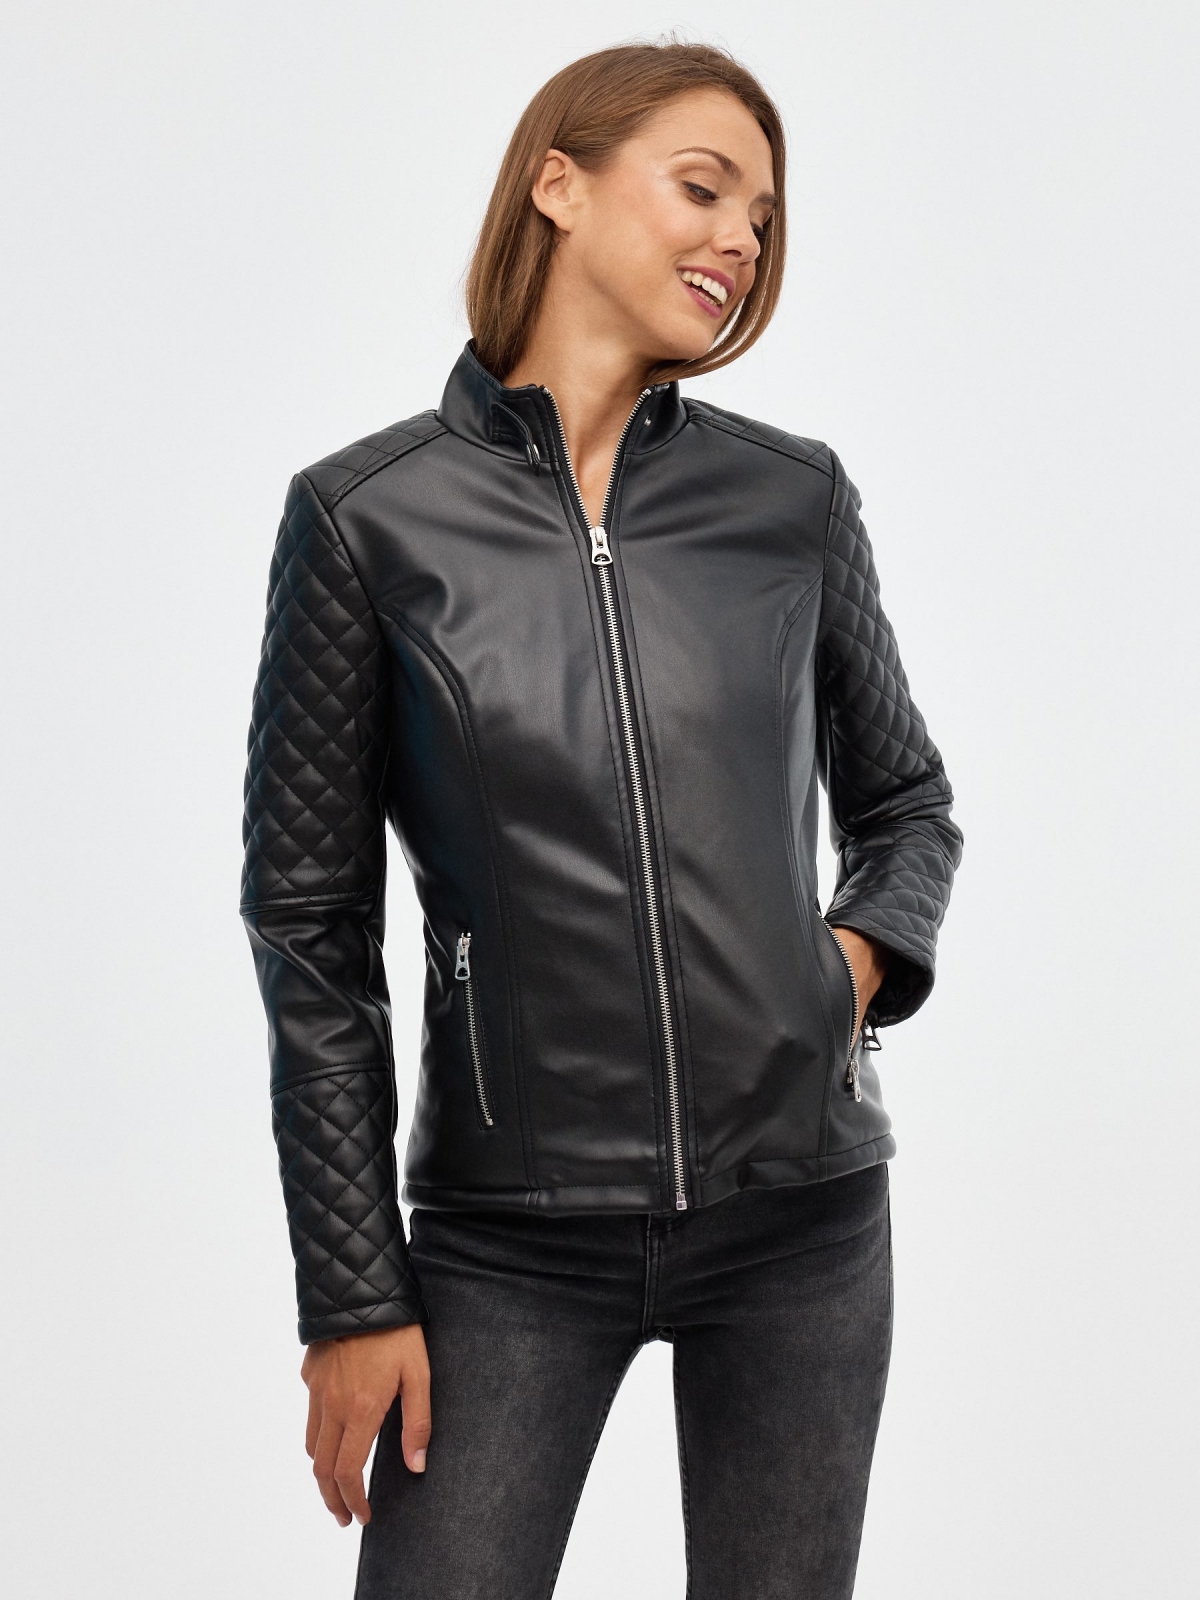 Leather effect biker jacket black middle front view